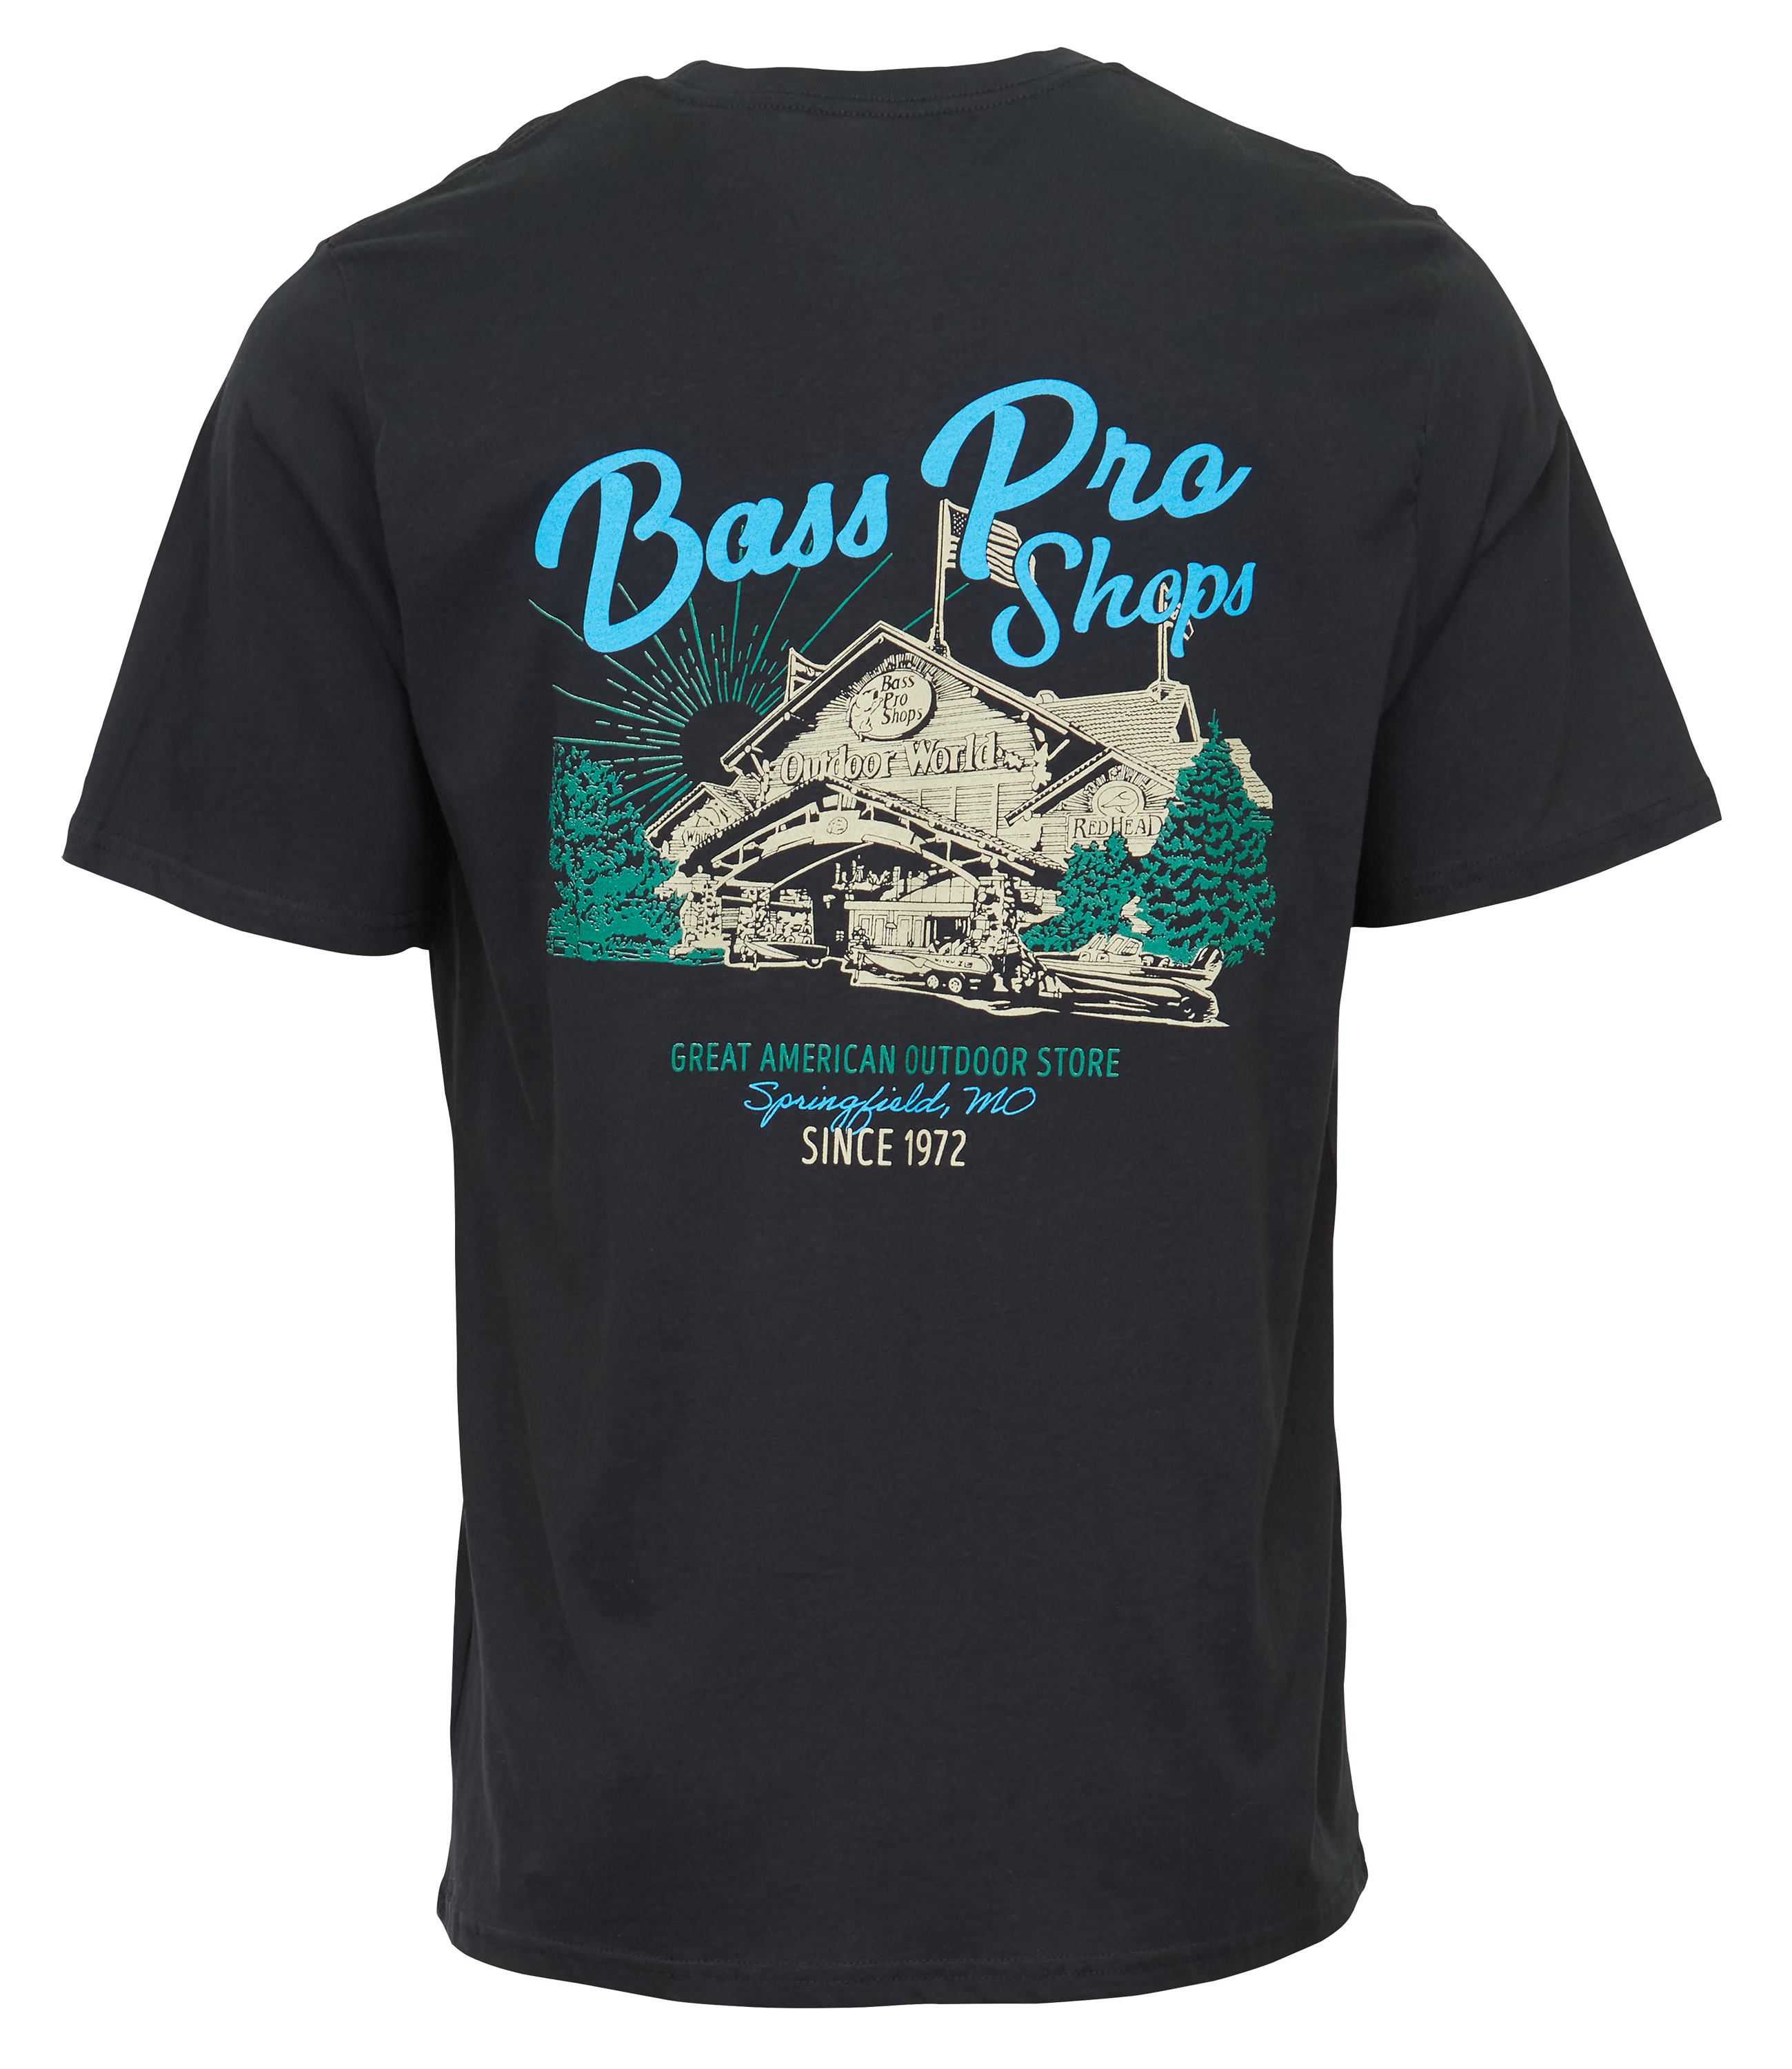 Bass Pro Shops Johnny Morris Woodcut Logo Short-Sleeve T-Shirt for